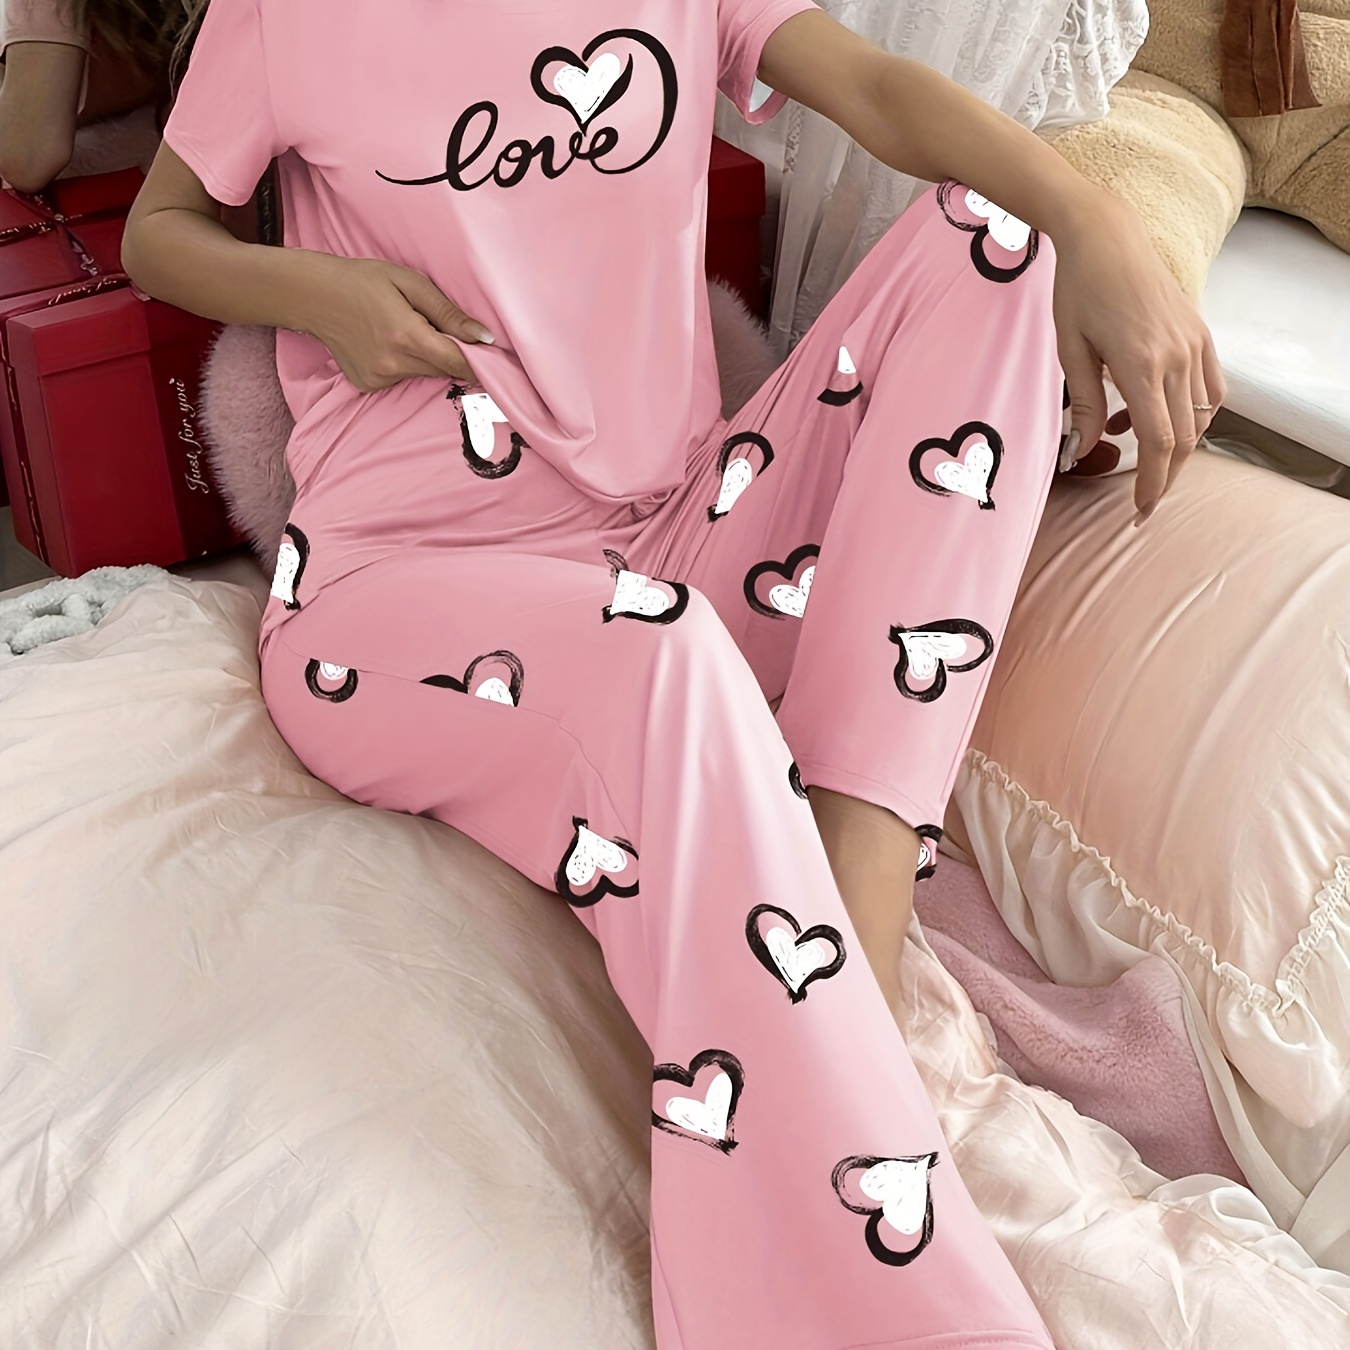 

Heart & Letter Print Pajama Set, Casual Short Sleeve Round Neck Top & Elastic Pants, Women's Sleepwear